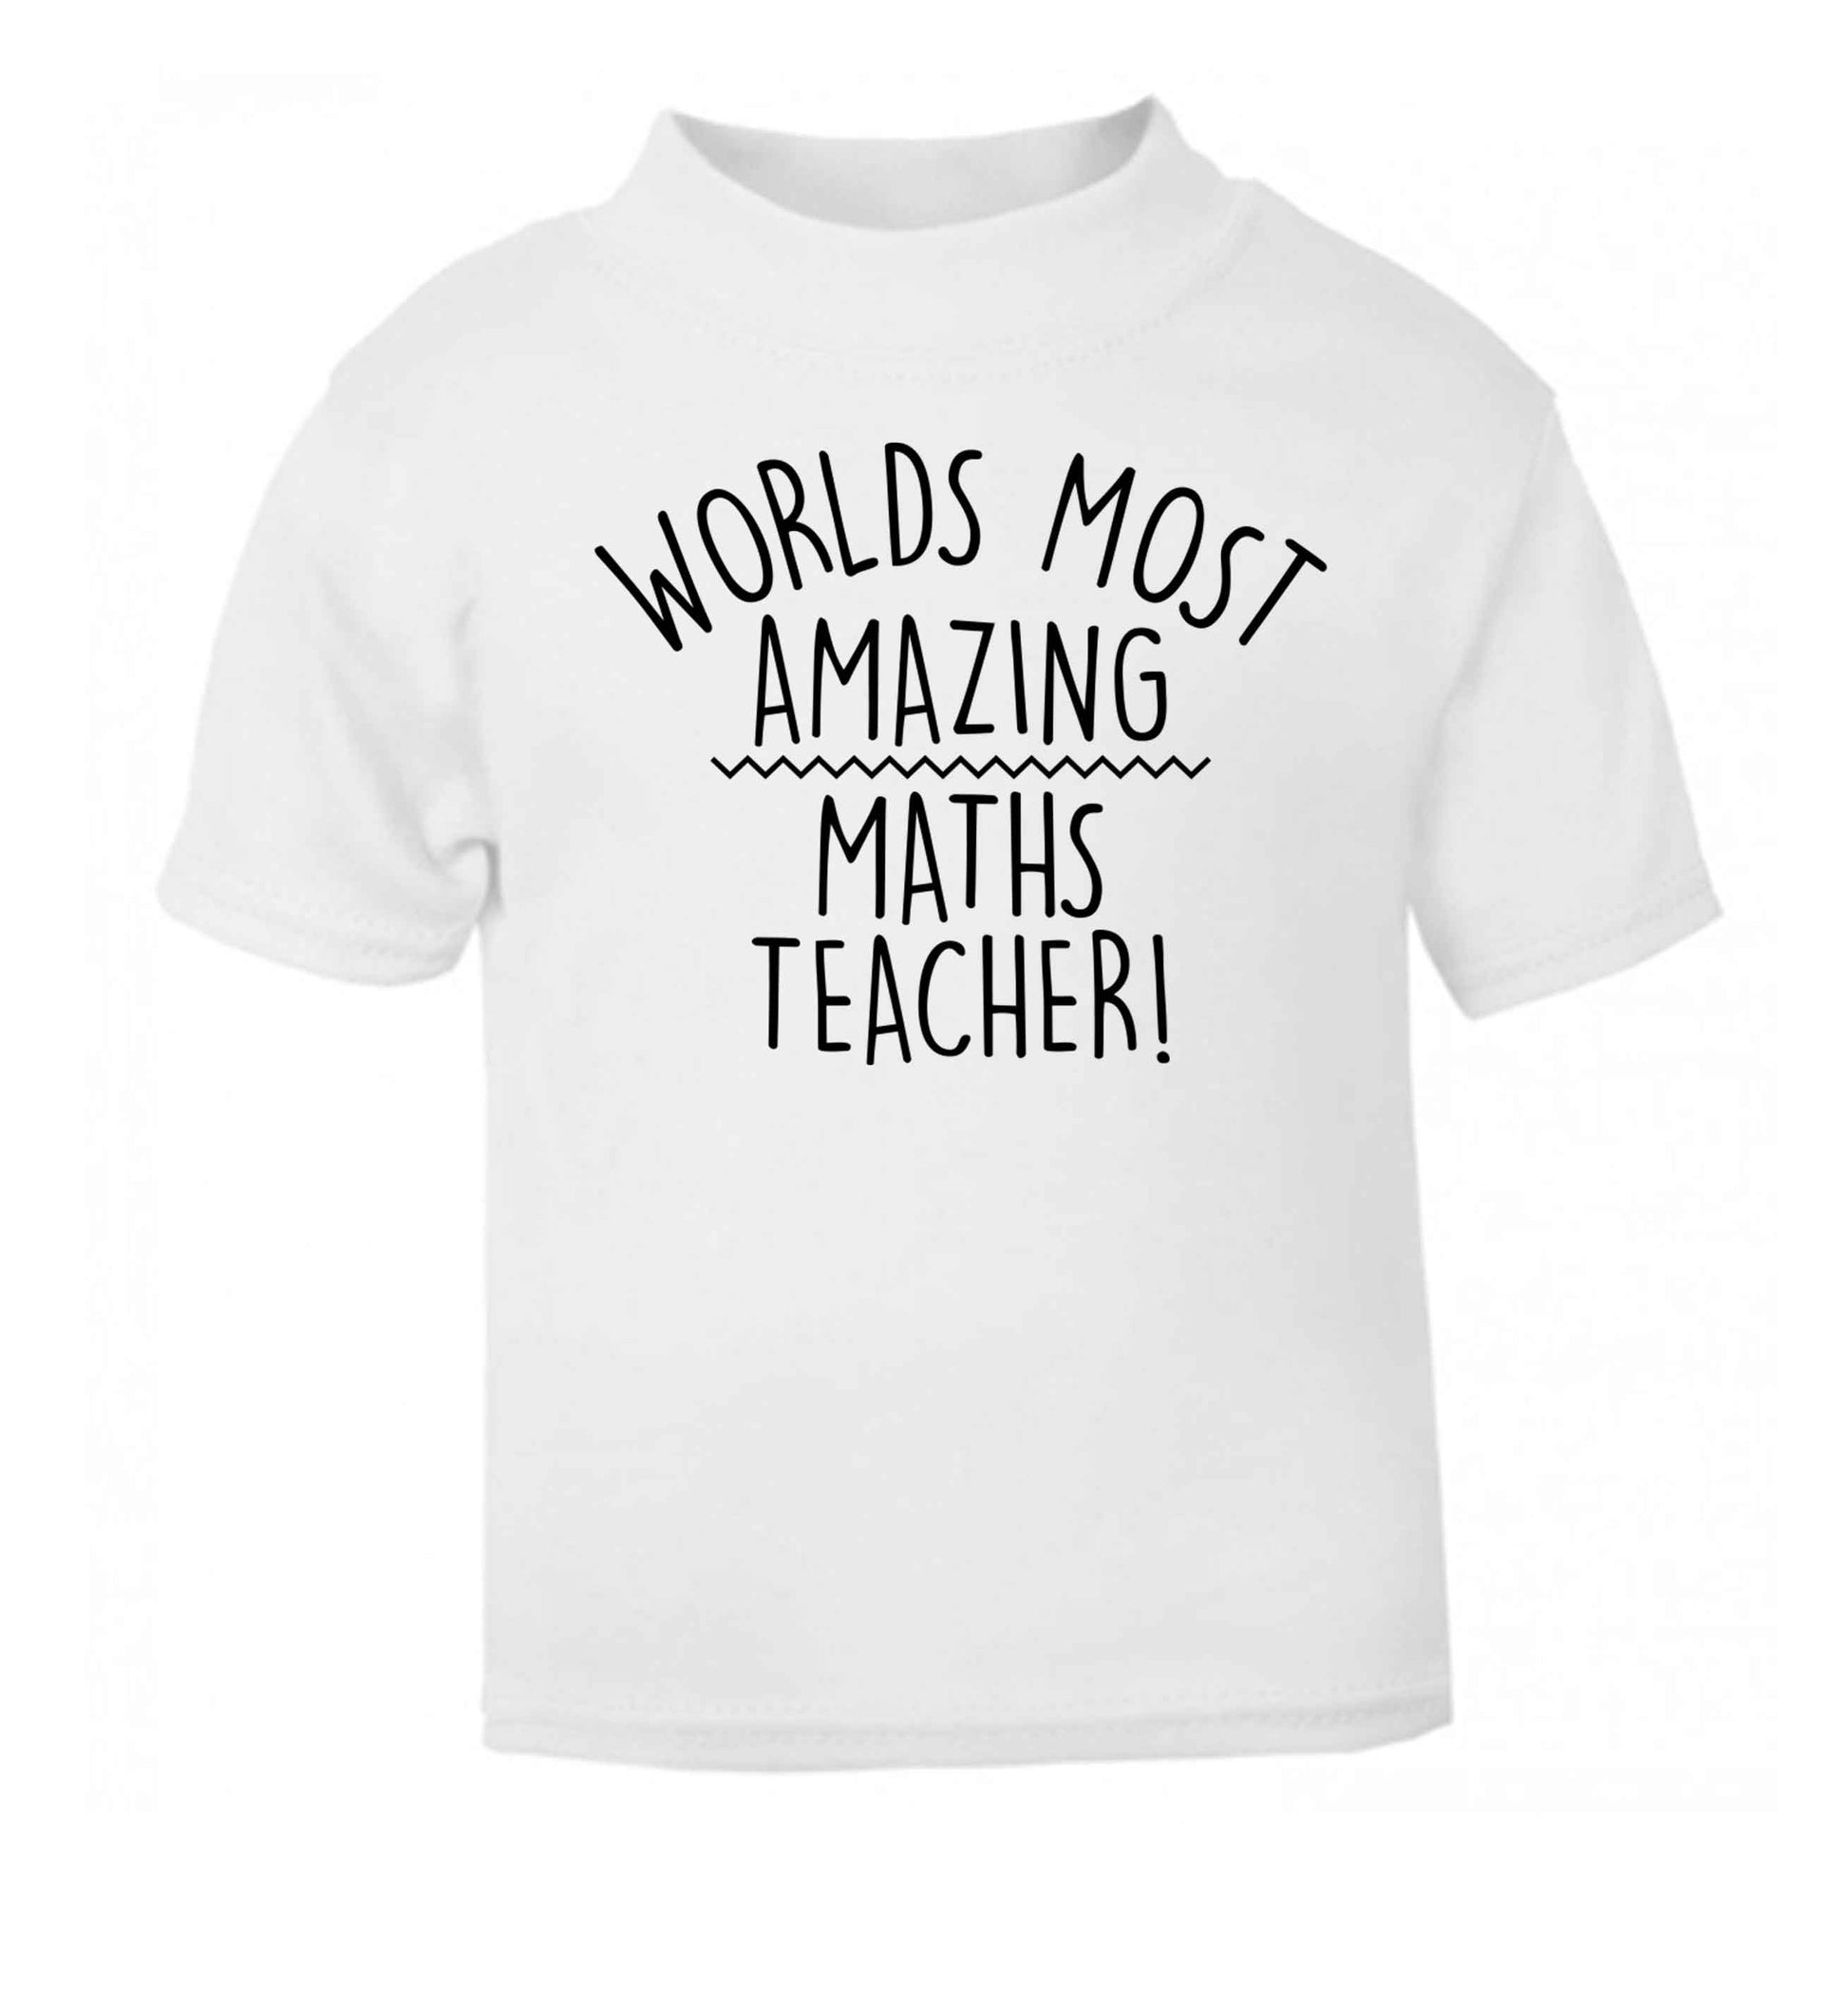 Worlds most amazing maths teacher white baby toddler Tshirt 2 Years